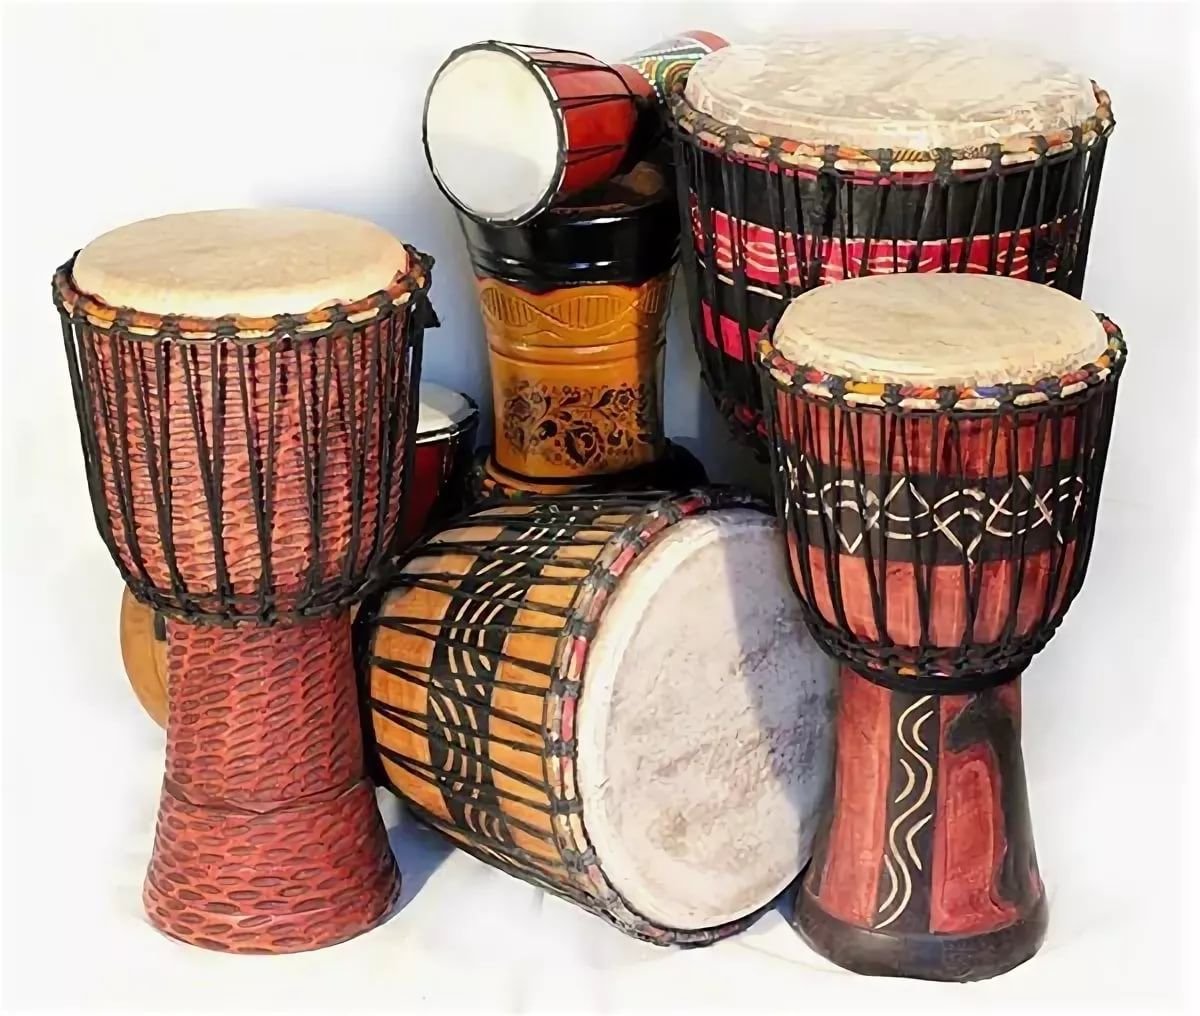 Джембе музыкальный инструмент. Музыкальный инструмент Африки джембе. Барабан 1980 Африка джембе -. Музыкальный инструмент барабан джембе. Музыка африканские барабаны